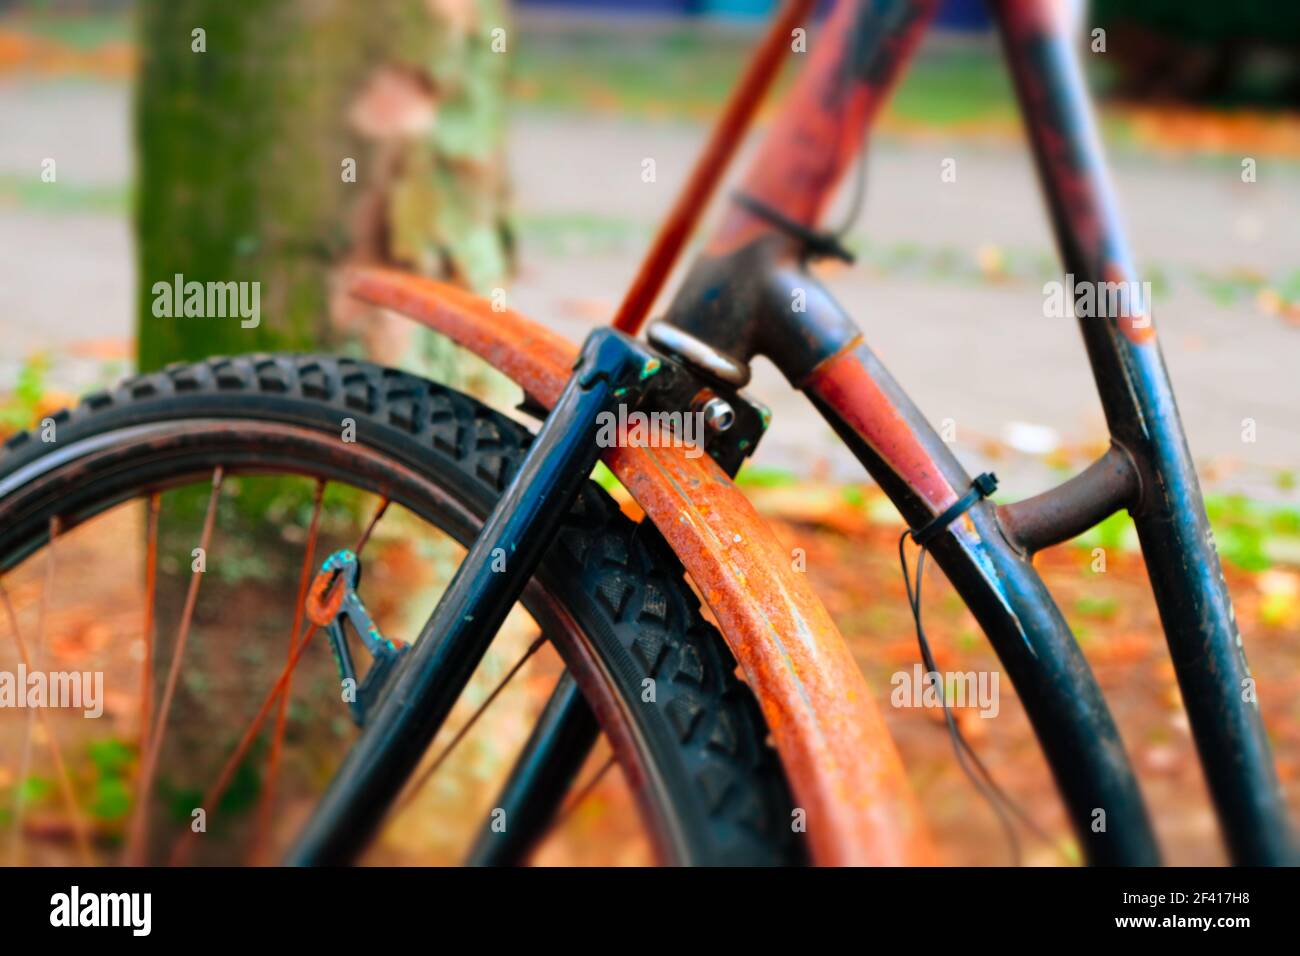 Rusty bike front wheel Stock Photo